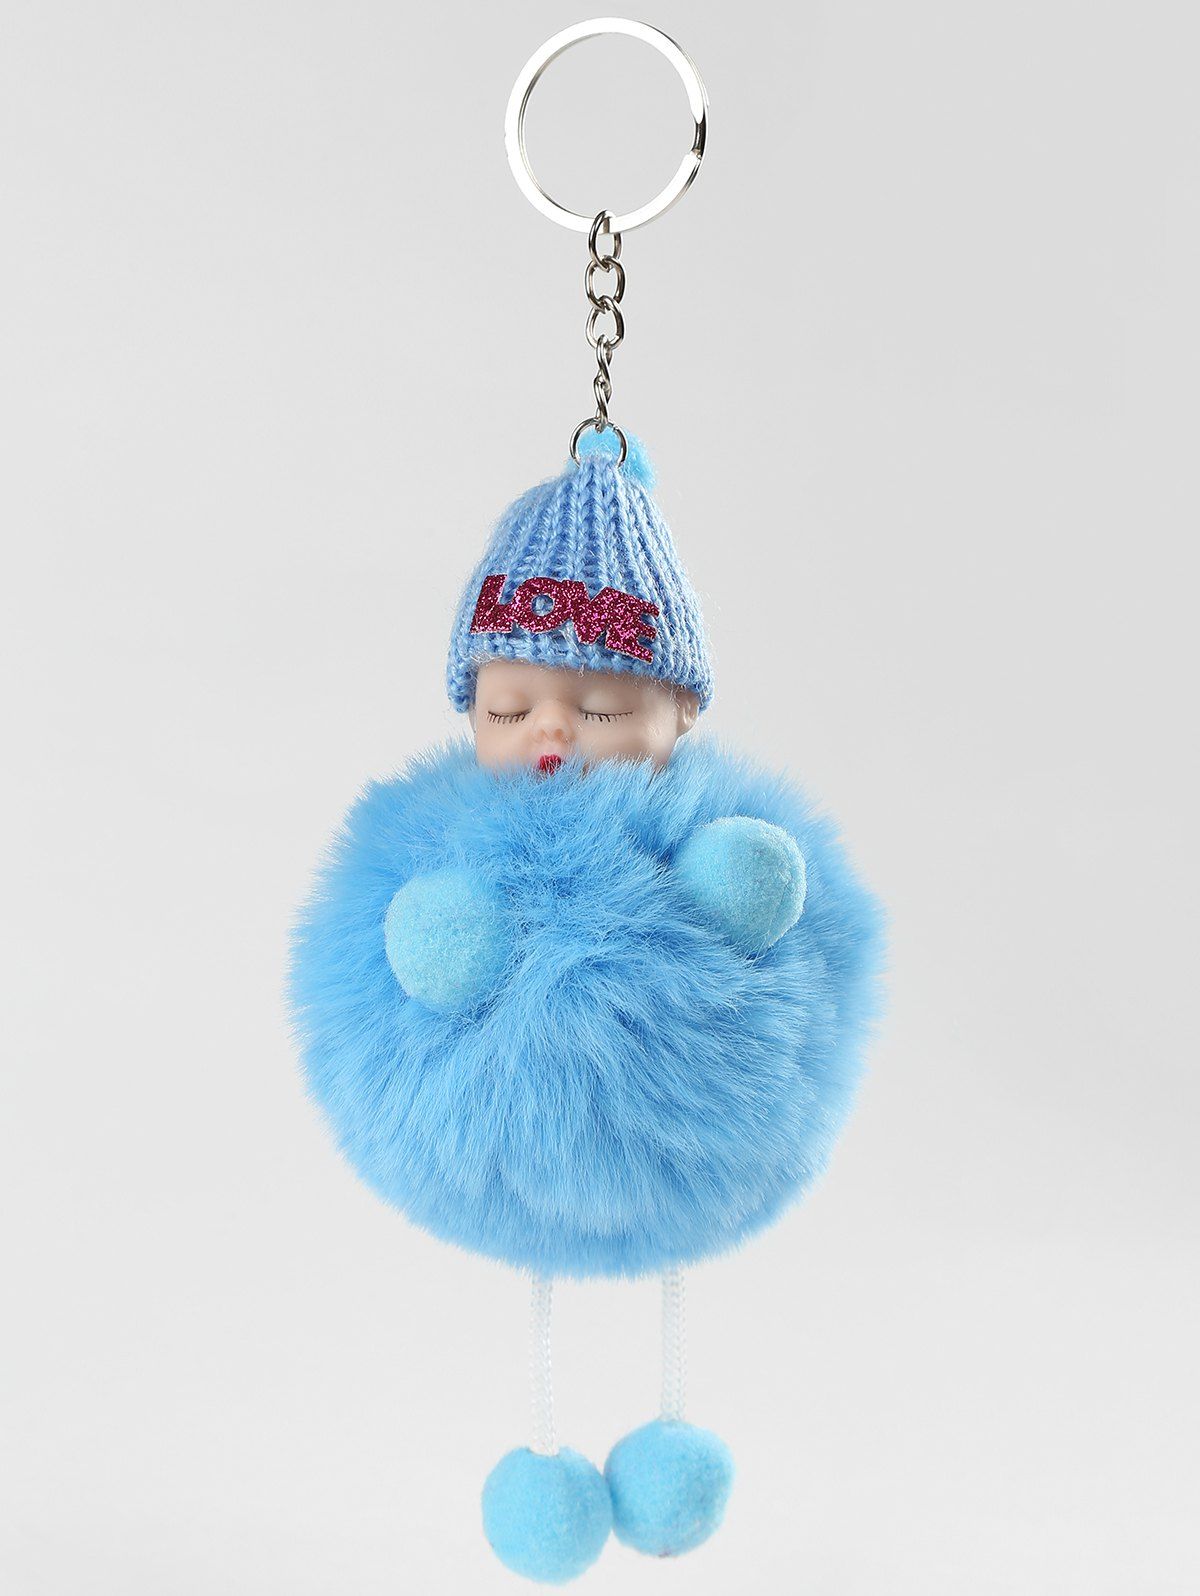 

Stuffed Toy Sleeping Baby with Key Chain, Sky blue